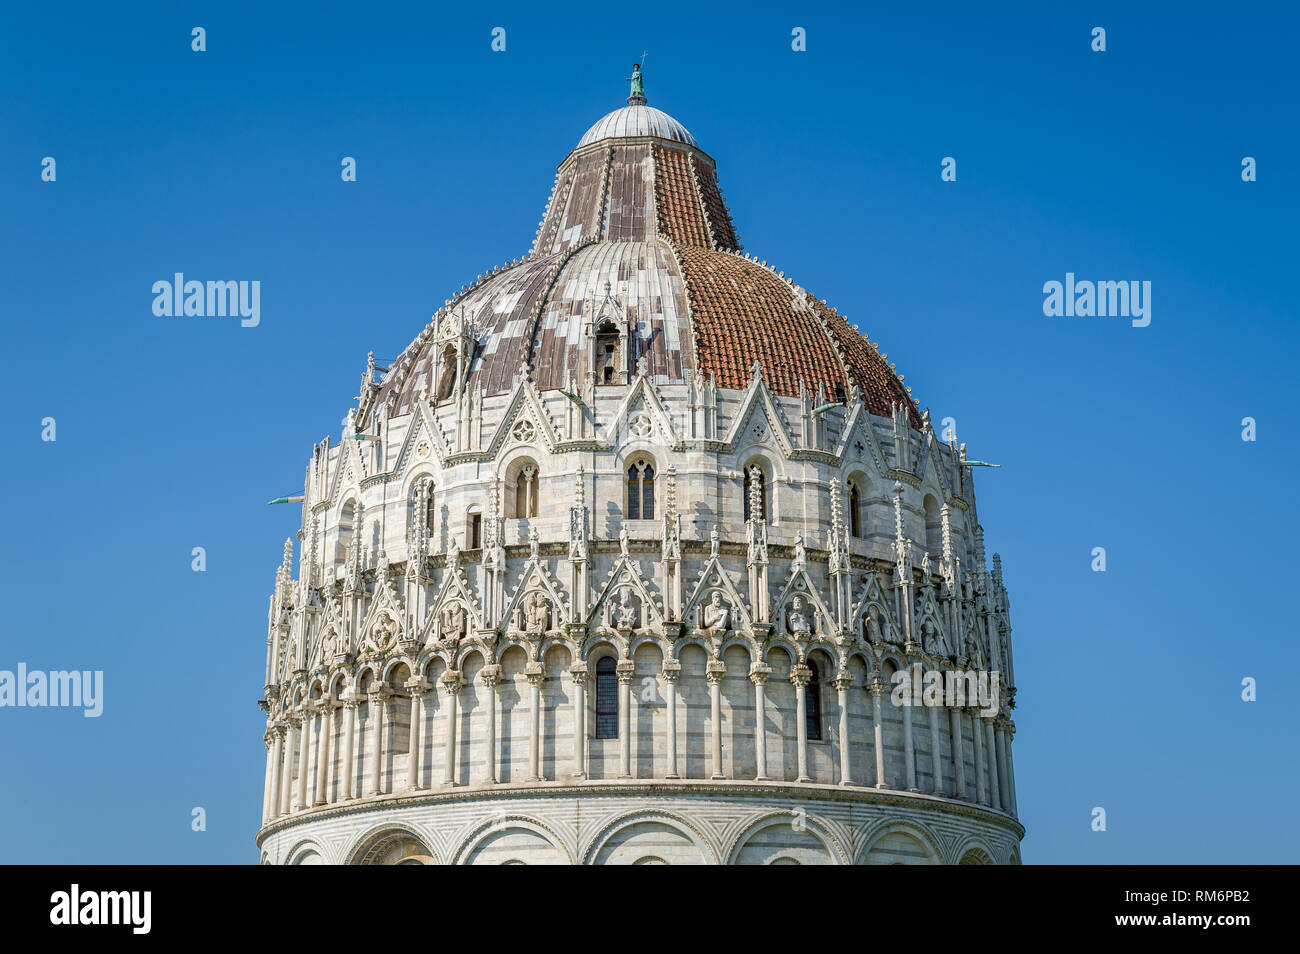 Pisa Baptistery heritage tower decoration close up photo. Tuscany region, Italy Stock Photo